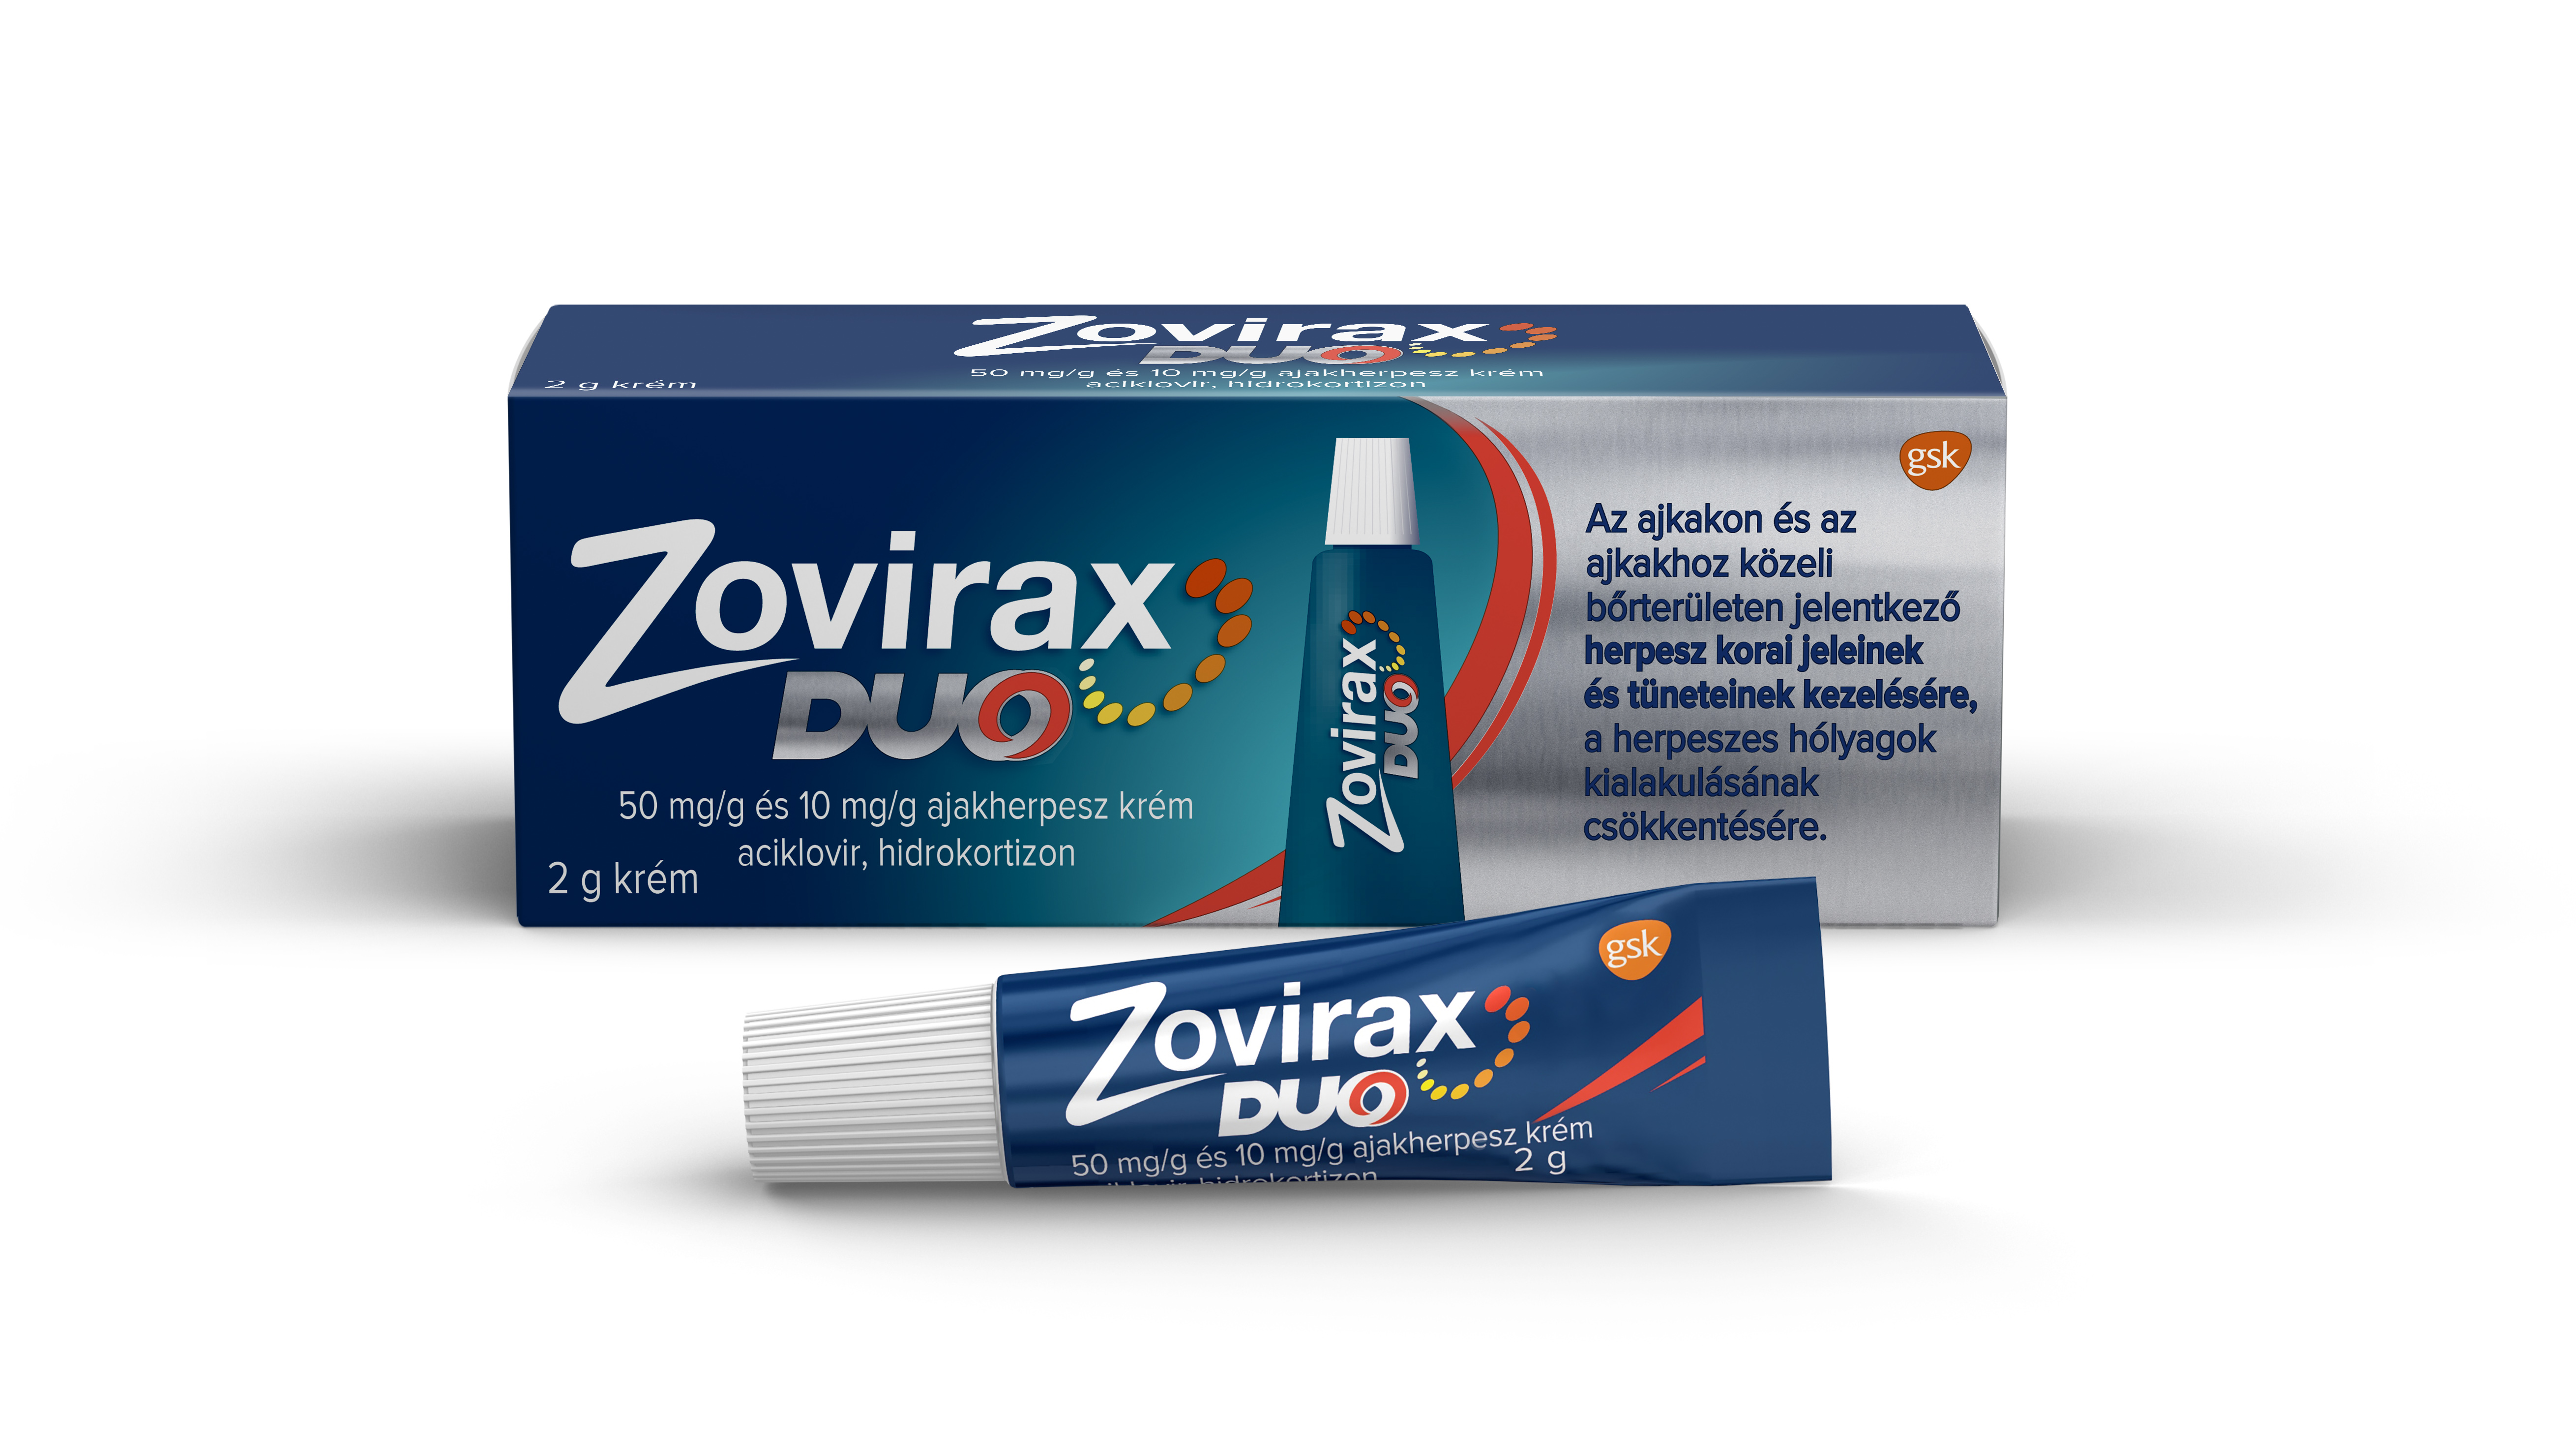 Zovirax Duo 50 mg/g+10 mg/g ajakherpesz krém 